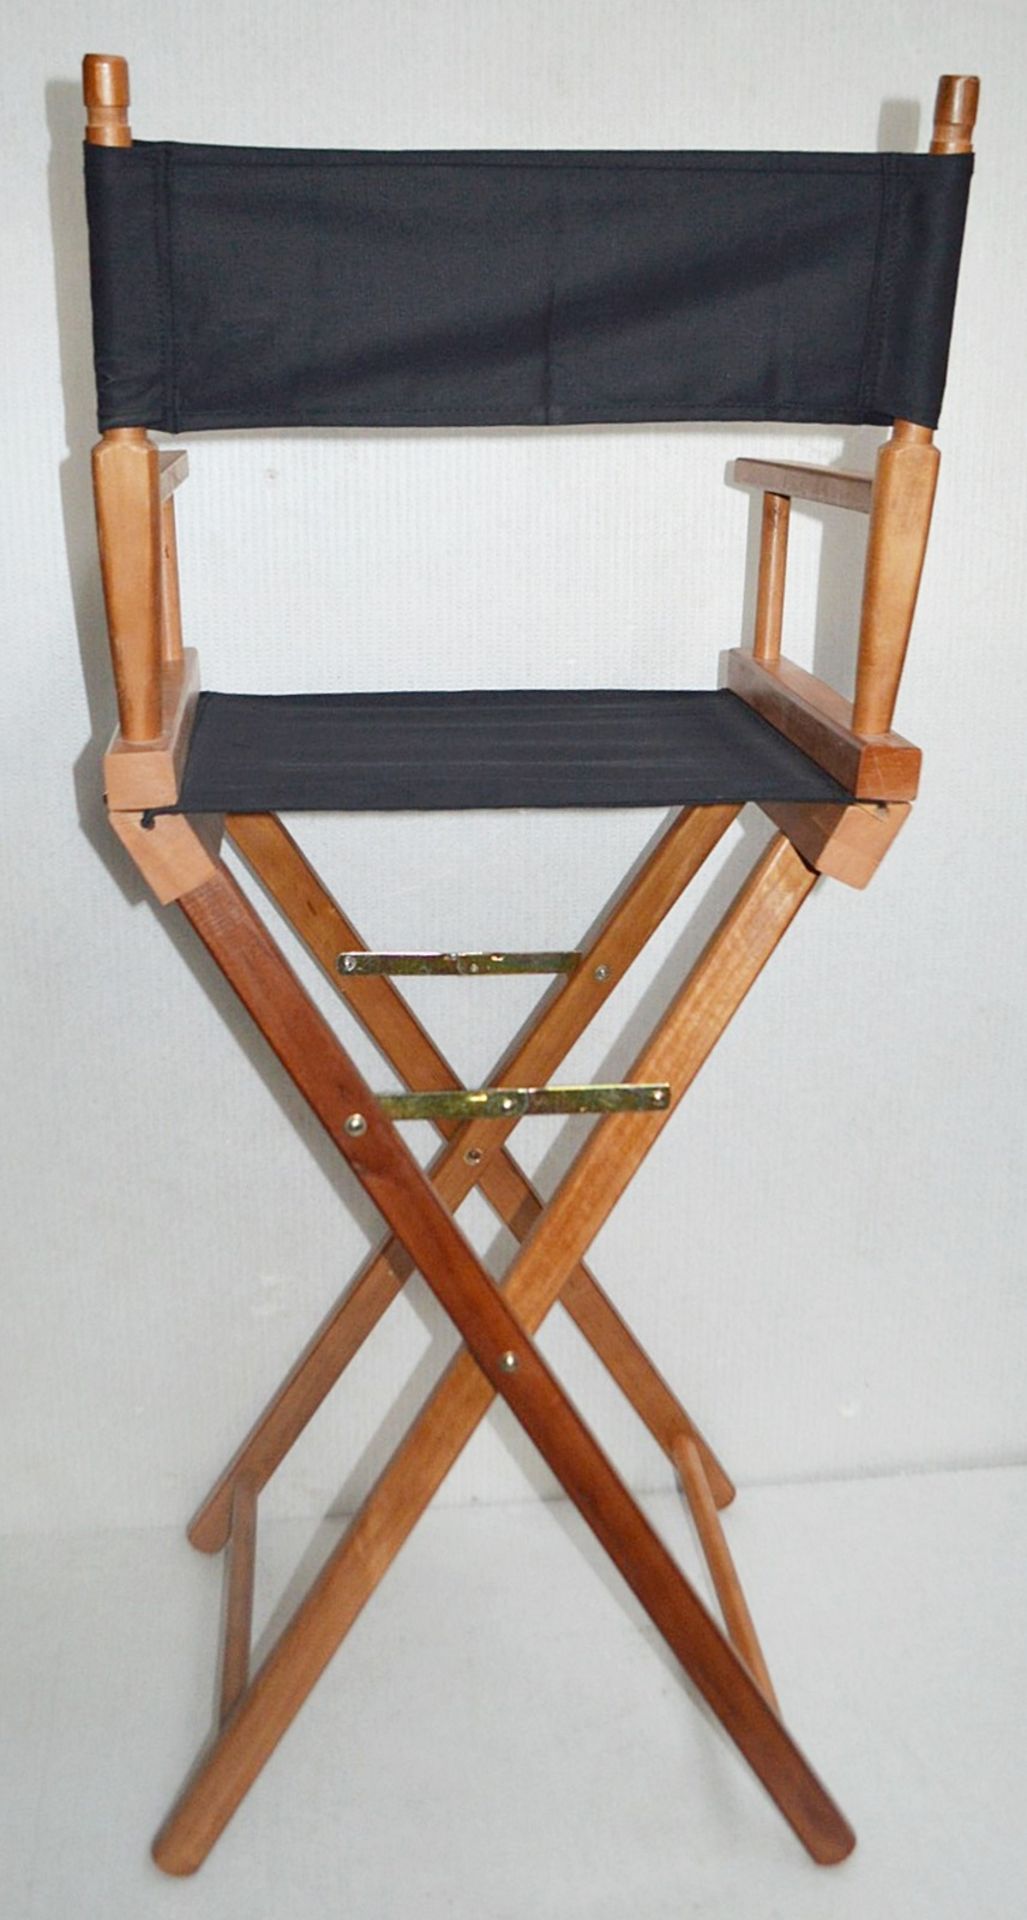 1 x Professional Tall Folding Directors Chair - Ex-Display - Dimensions (Approx): H120 x W52 x - Image 4 of 4